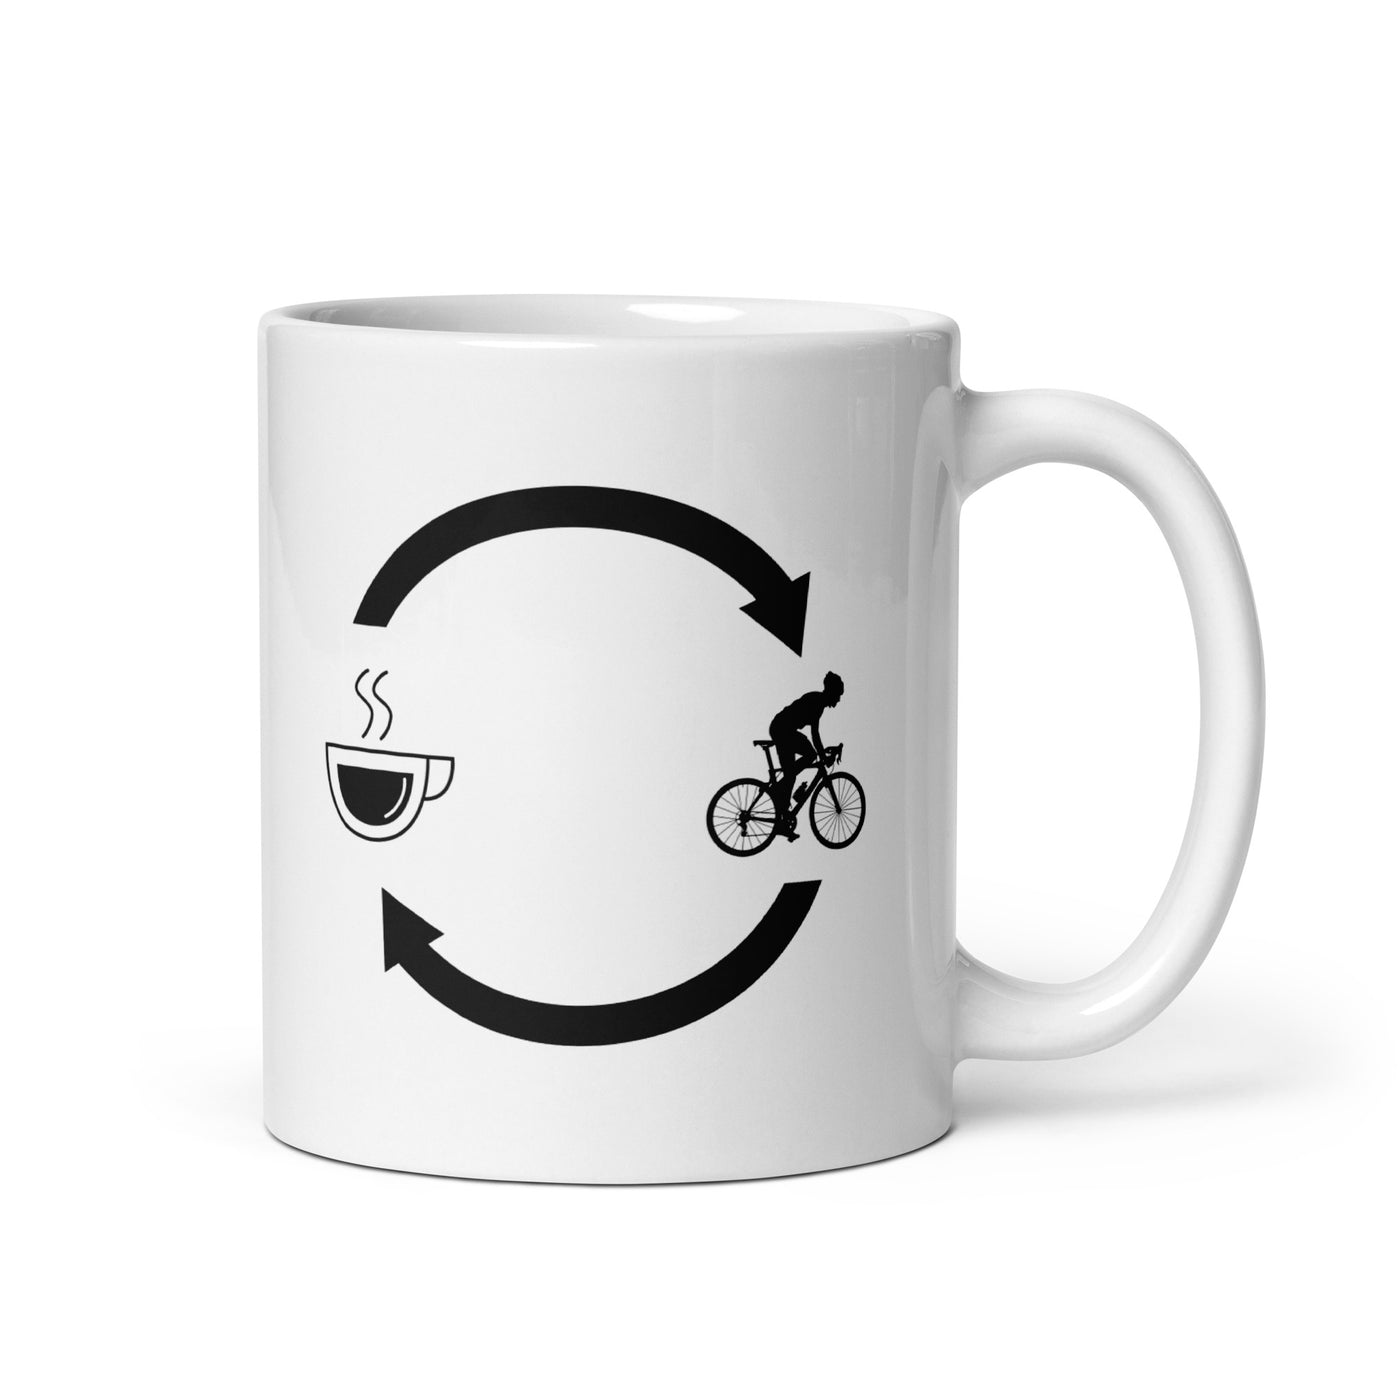 Coffee Loading Arrows And Cycling 1 - Tasse fahrrad